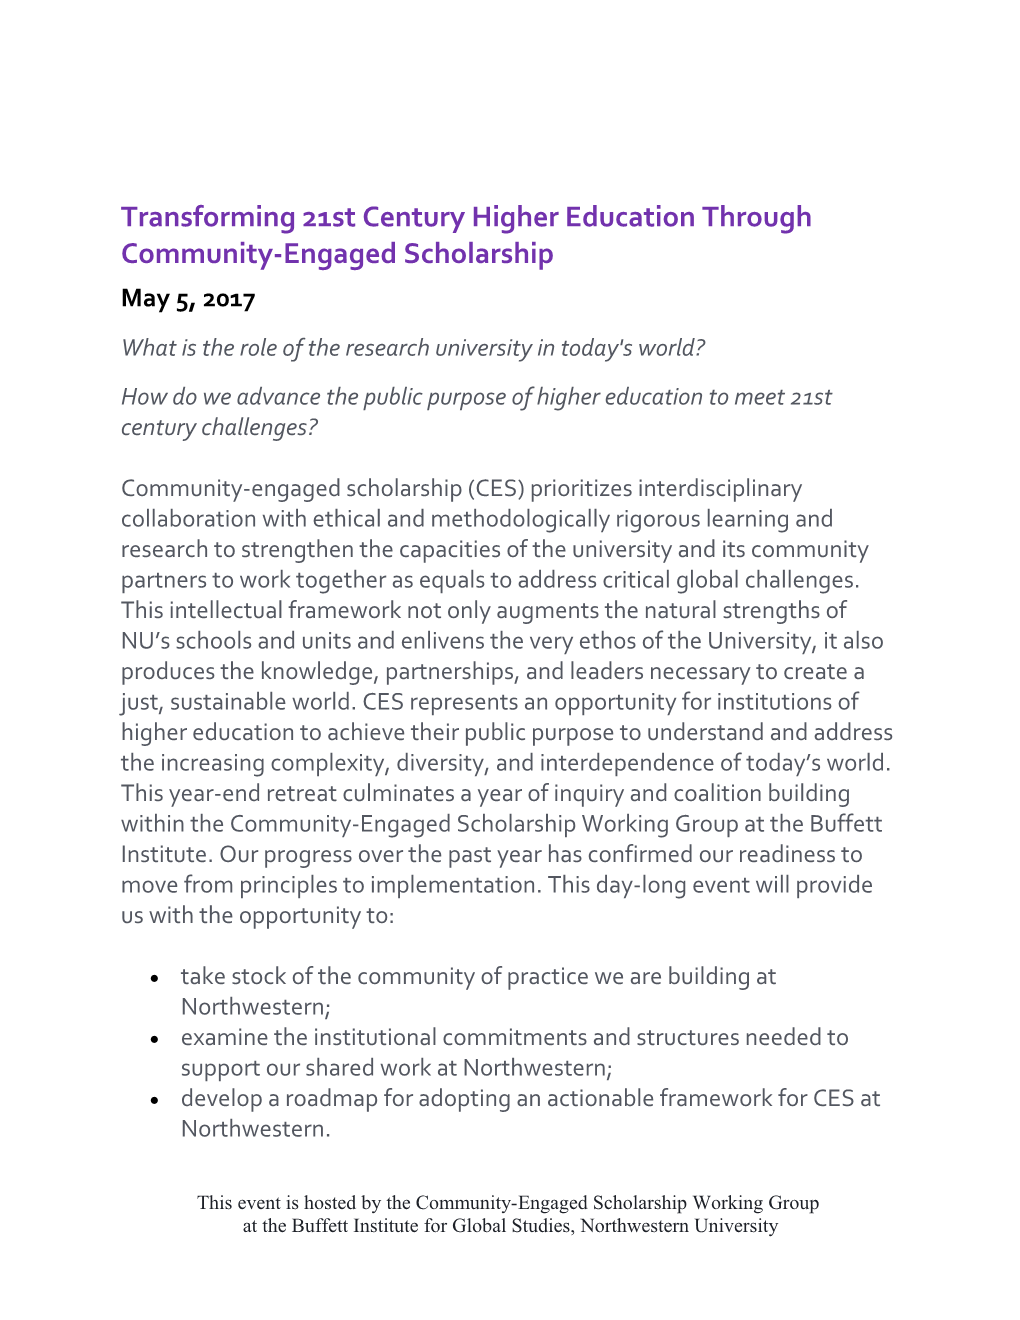 Transforming 21St Century Higher Education Through Community-Engaged Scholarship